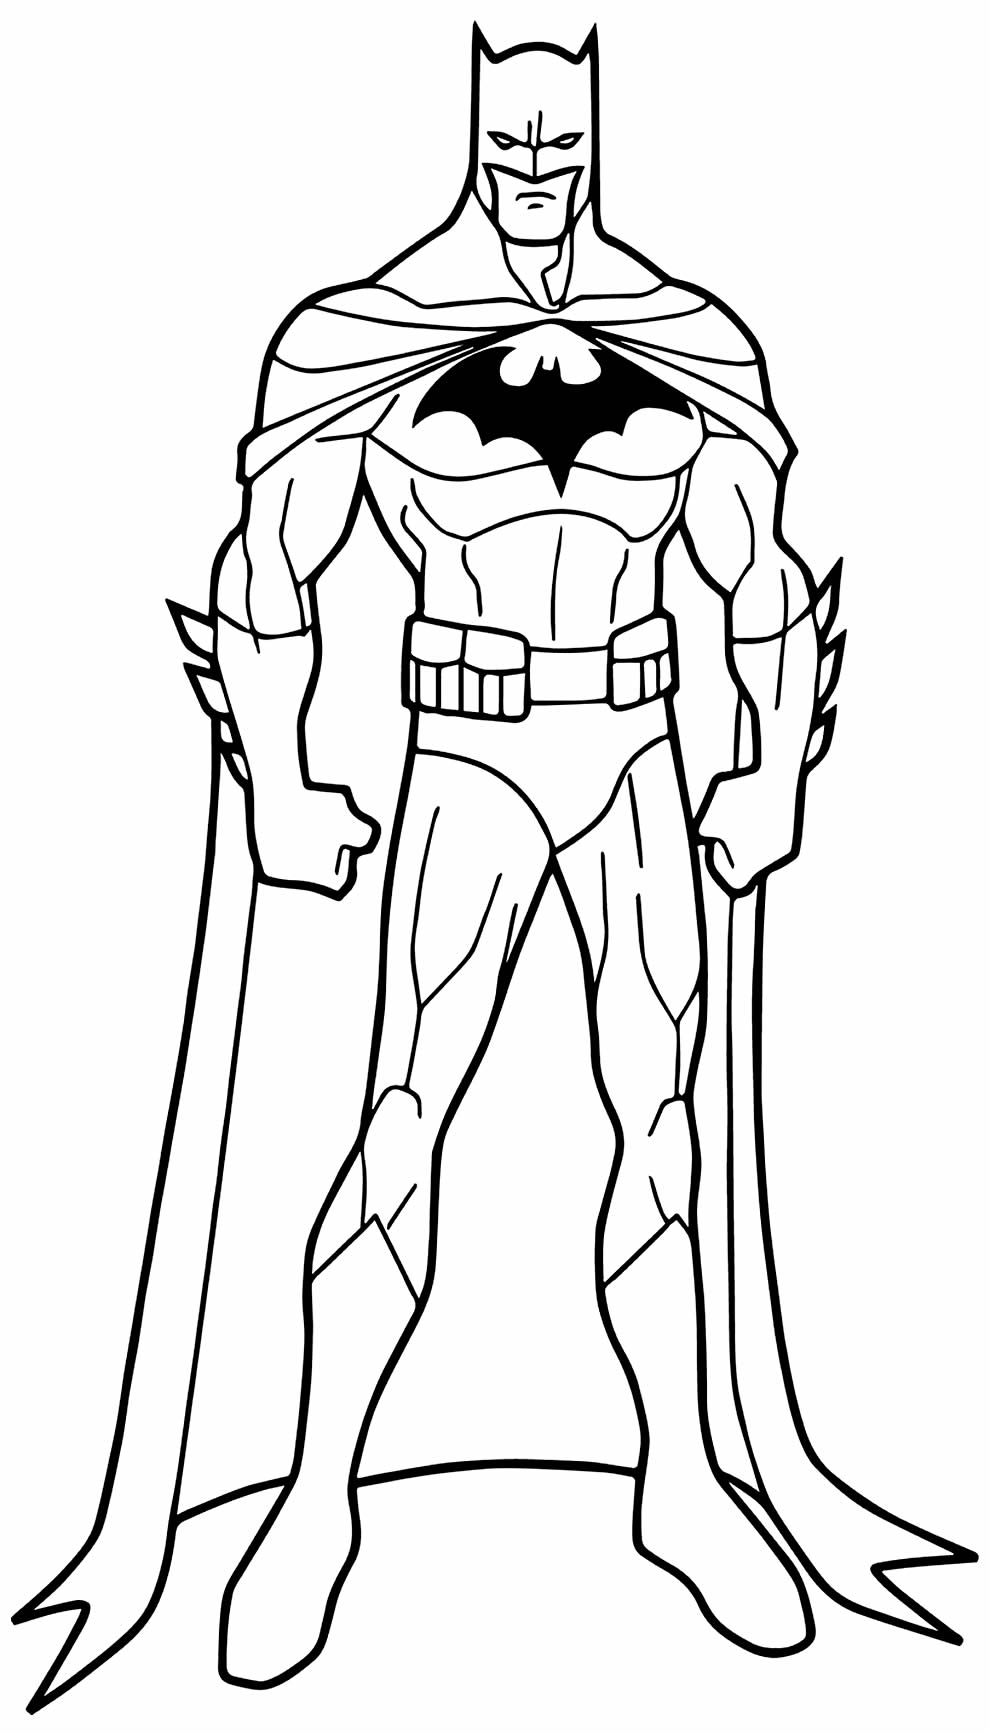 Imagem de Batman para pintar